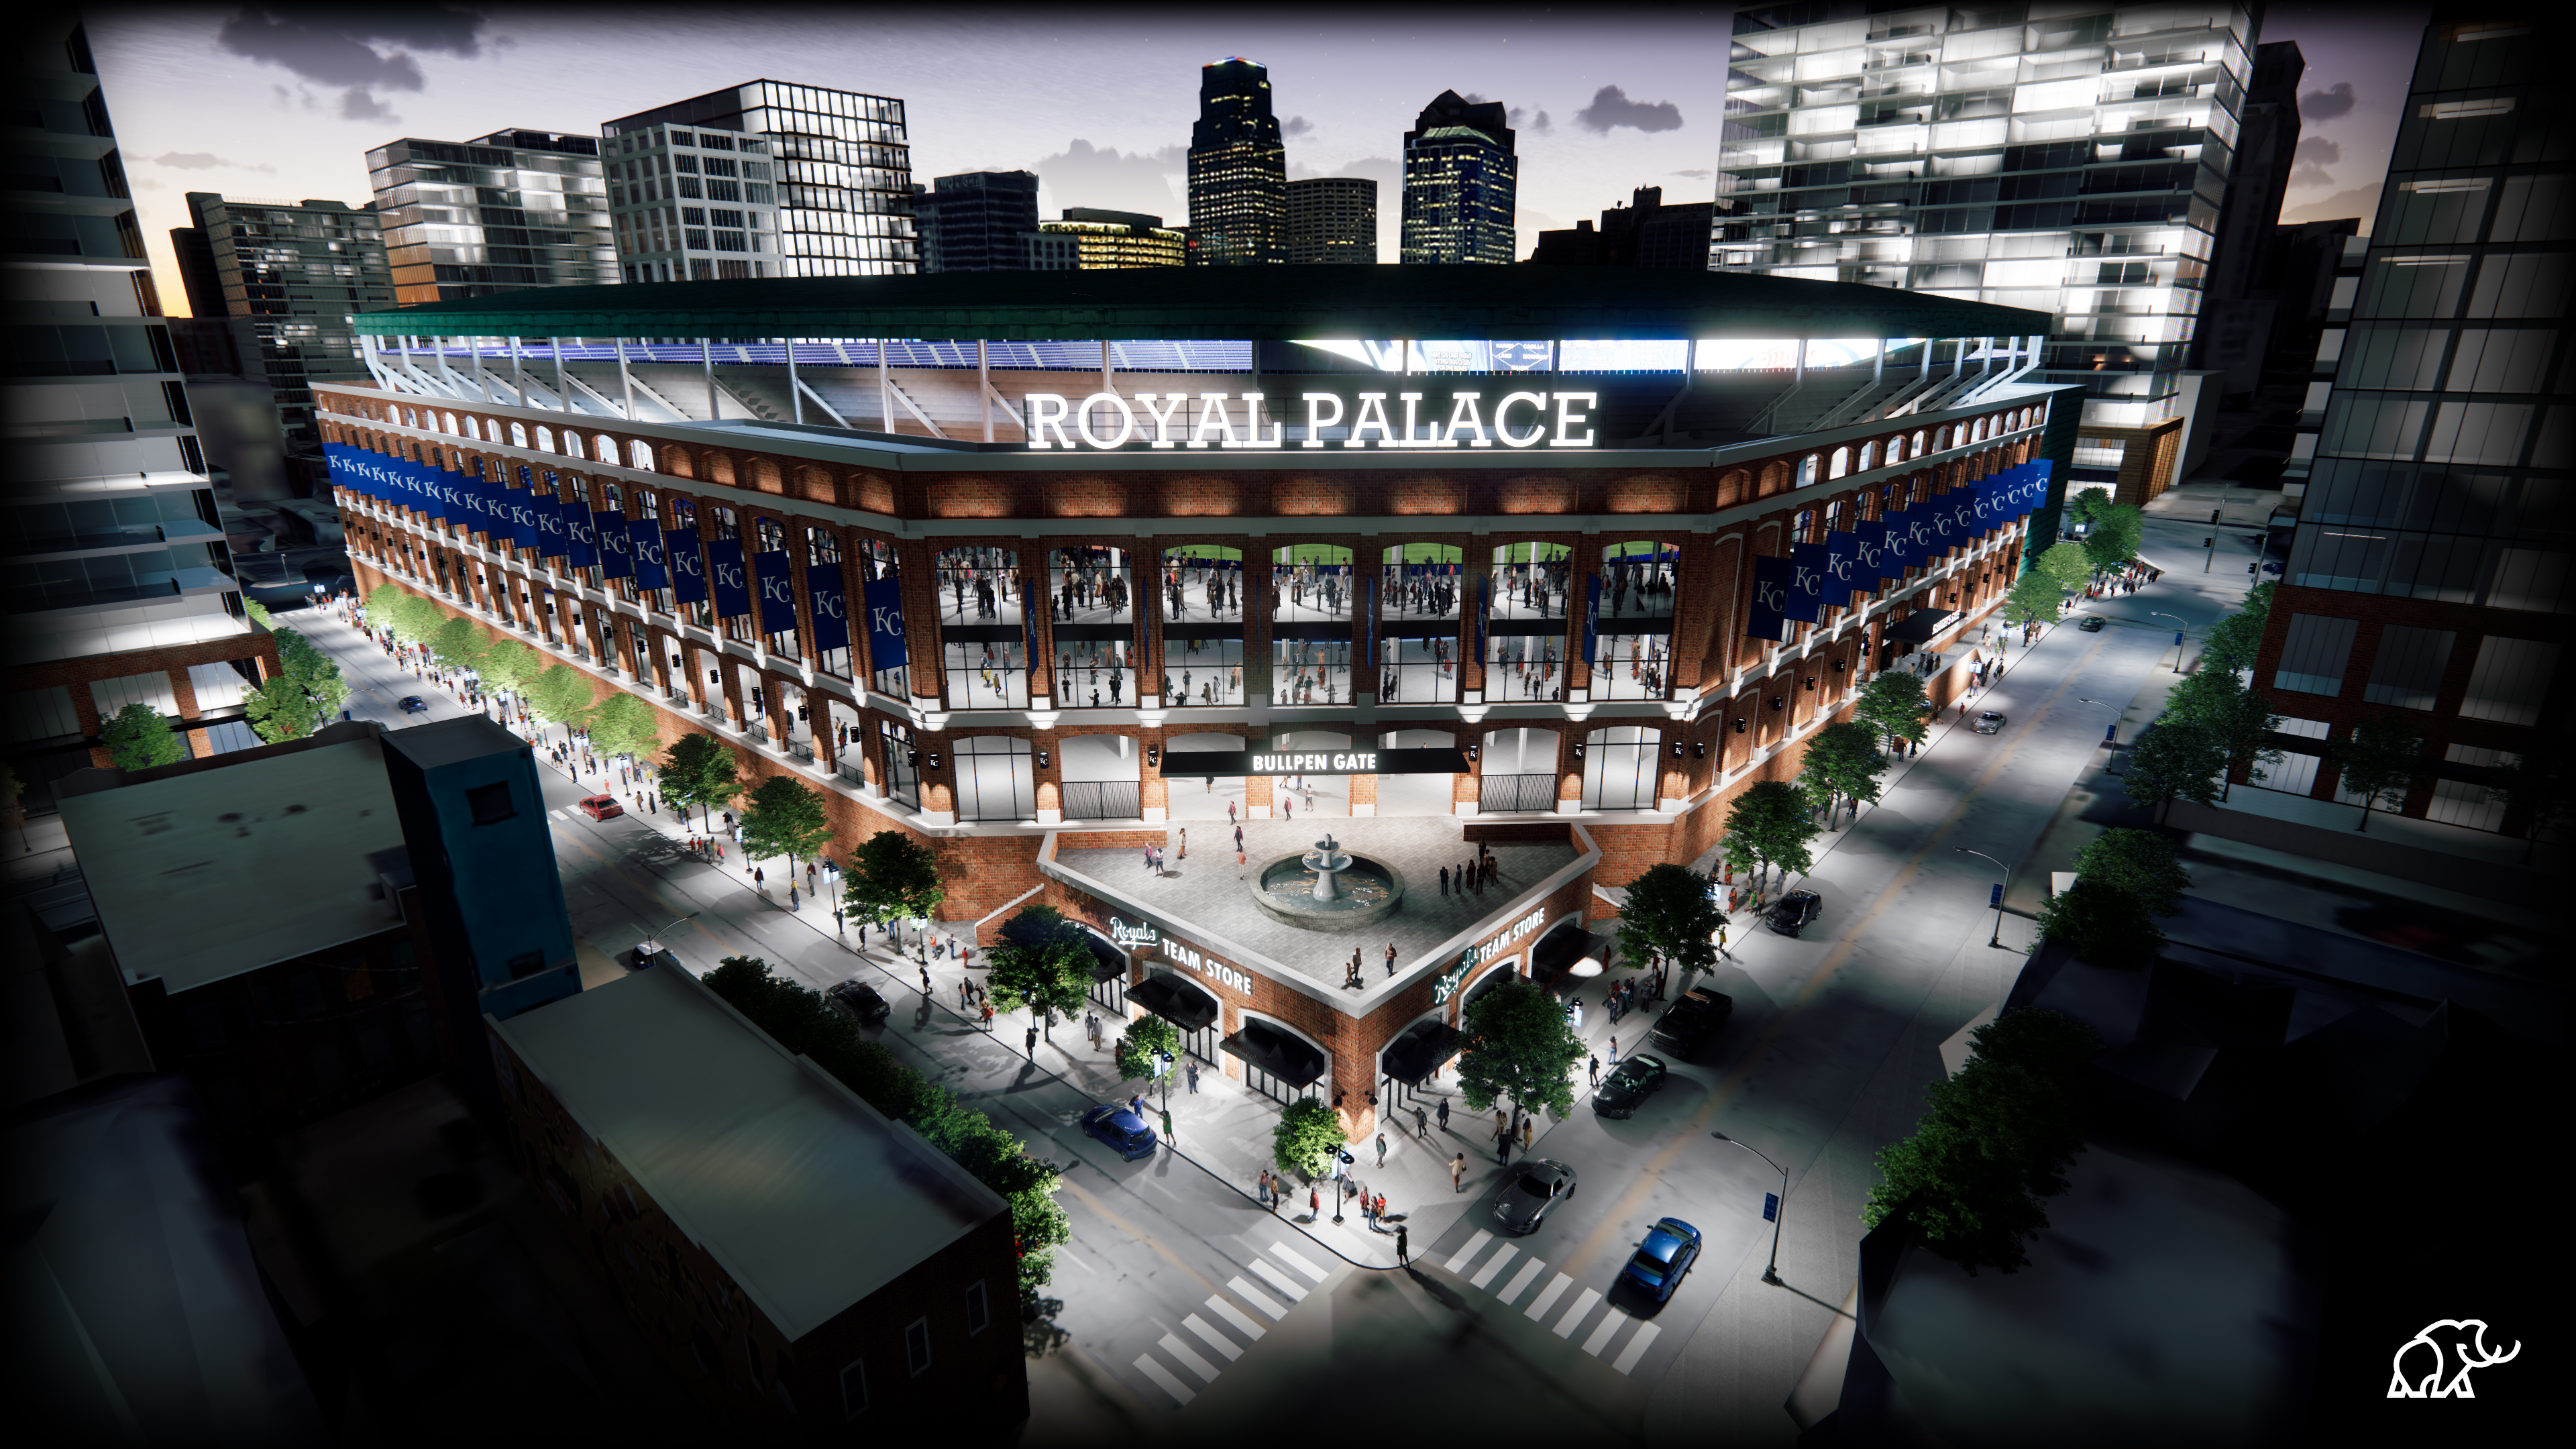 Royals pursuing new downtown Kansas City ballpark